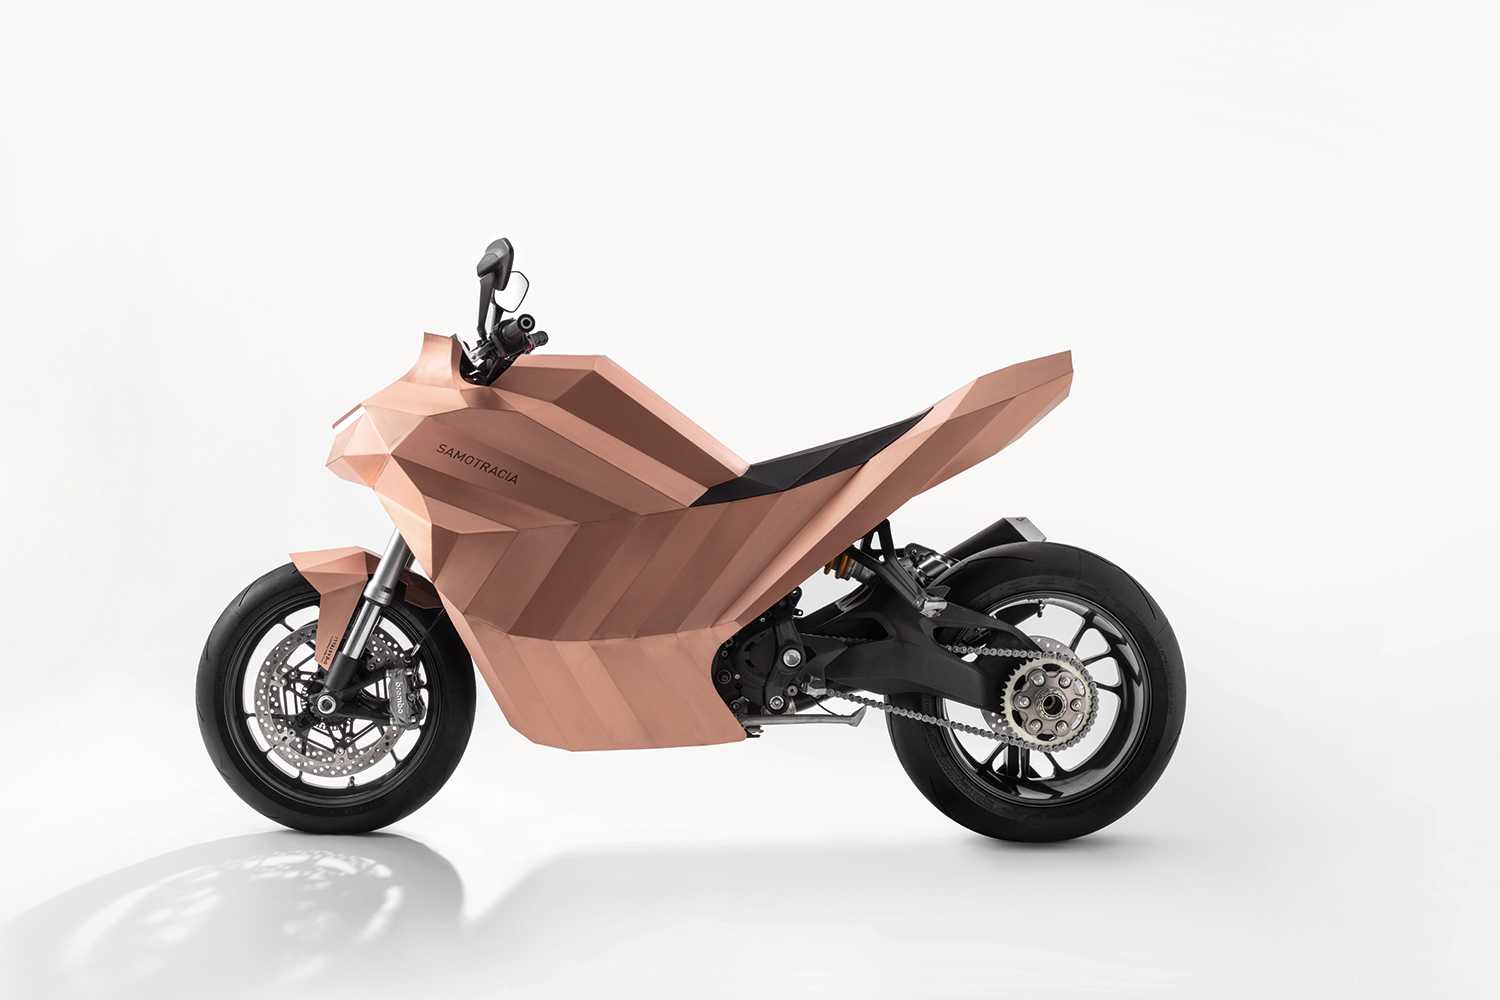 Copper motorcycle with aerodynamic aesthetics